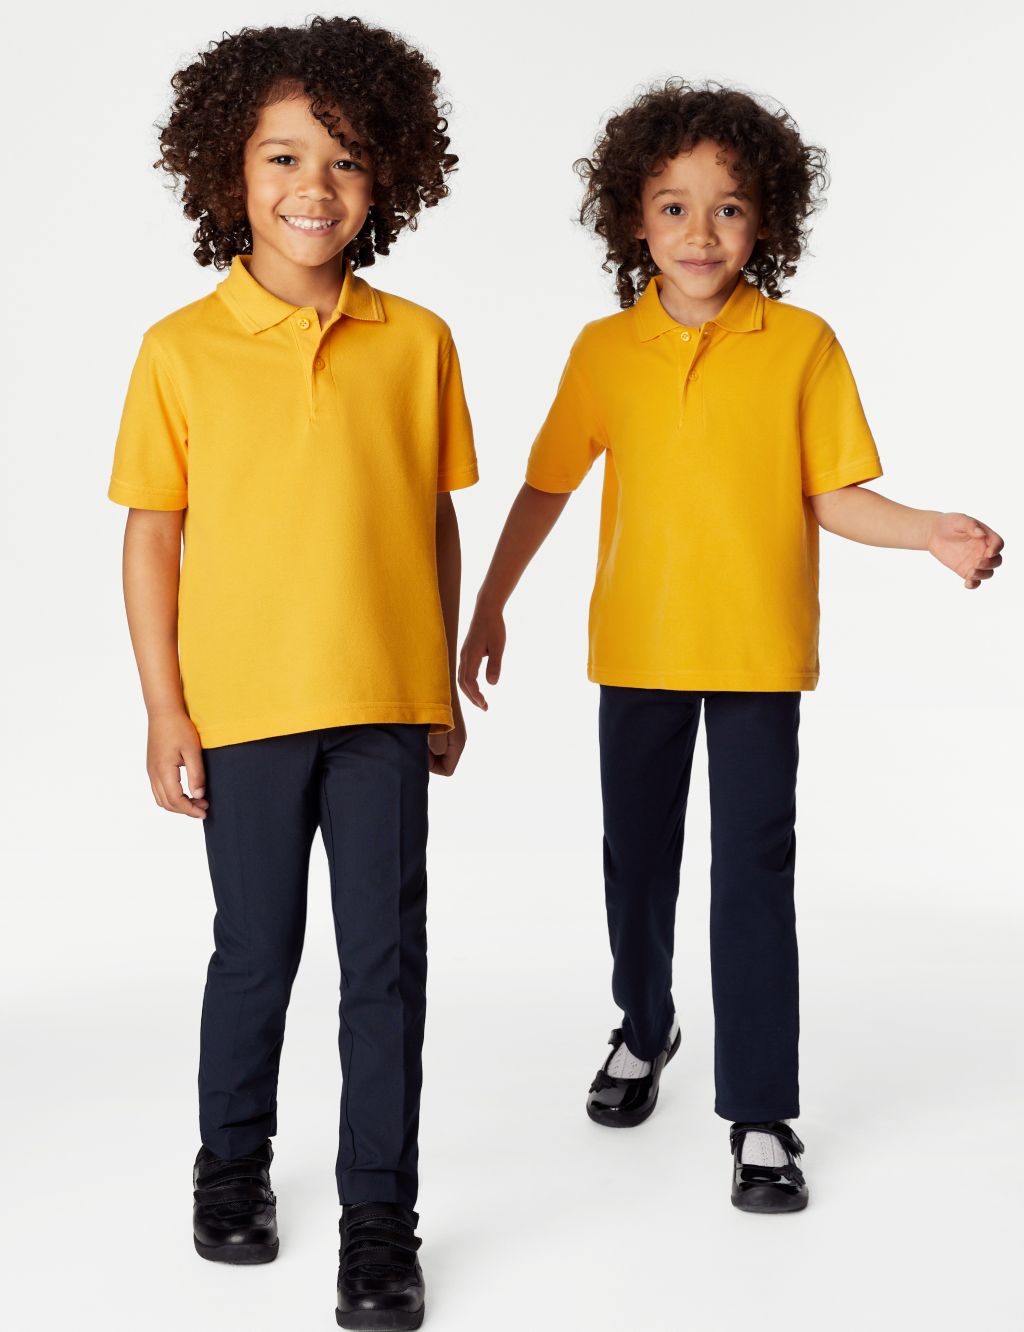 Unisex Pure Cotton School Polo Shirt (2-18 Yrs) image 2